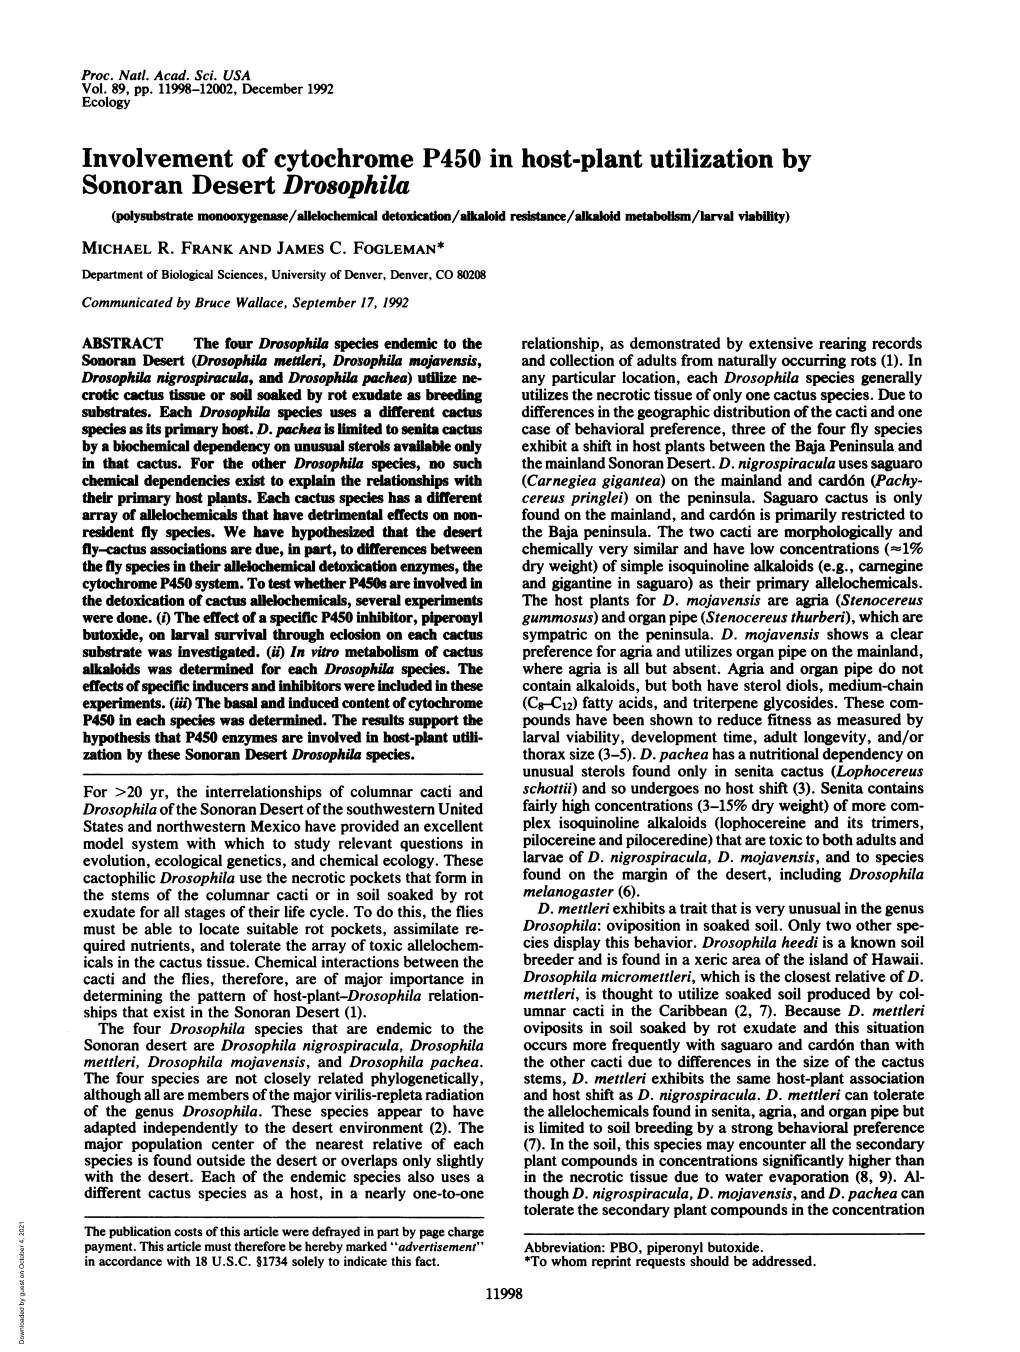 Sonoran Desert Drosophila (Polysubstrate Monooxygenase/Allelochemical Detoxicatlon/Alkalold Resistance/Alkaloid Metabolism/Larval Viability) MICHAEL R